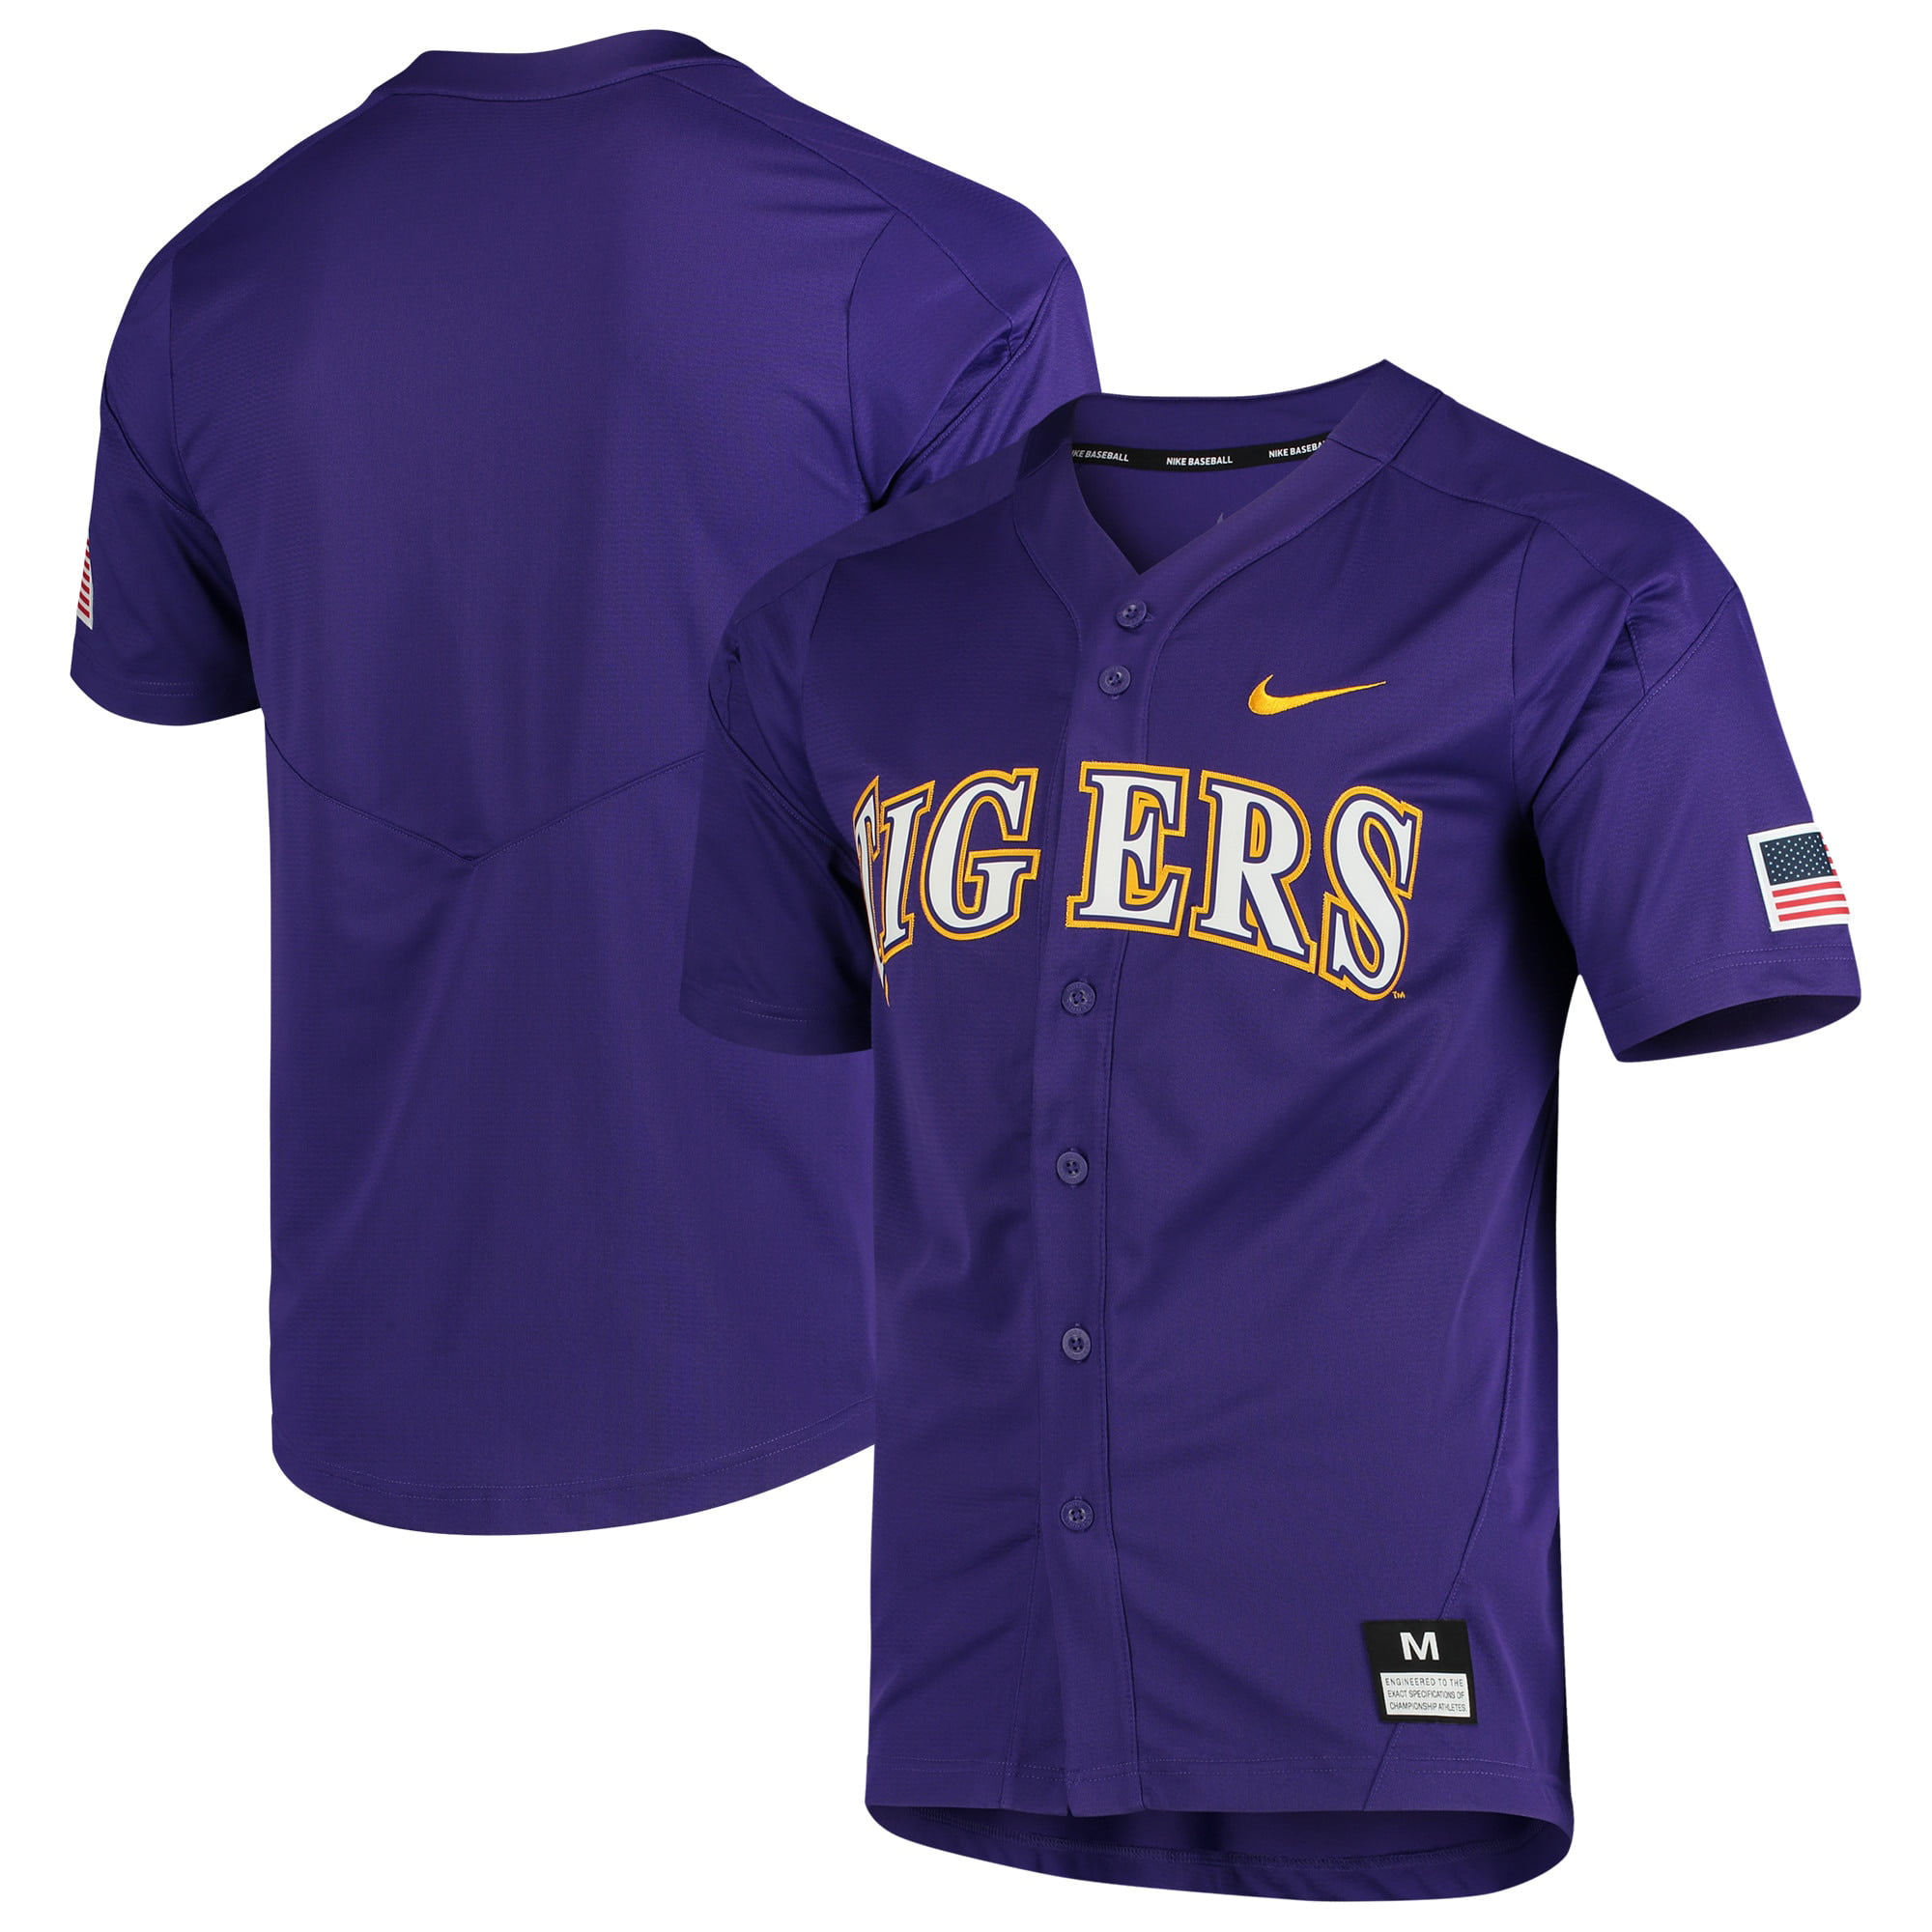 LSU Tigers Nike Vapor Untouchable Elite Full-Button Replica Baseball Jersey  - Purple